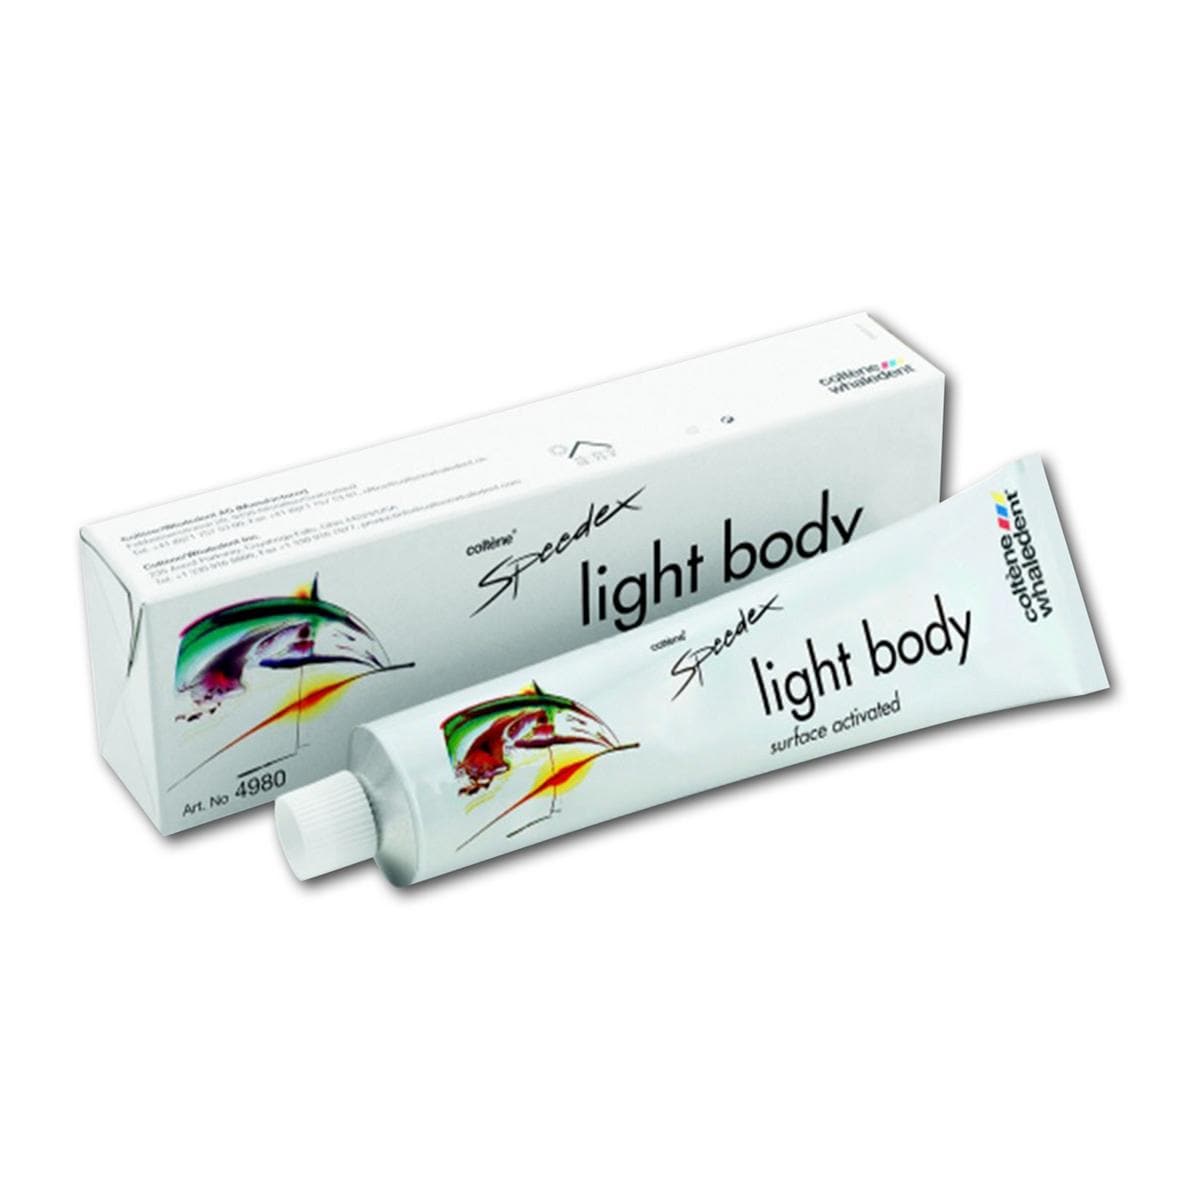 Speedex Light - Light body, 140 ml - REF 4980